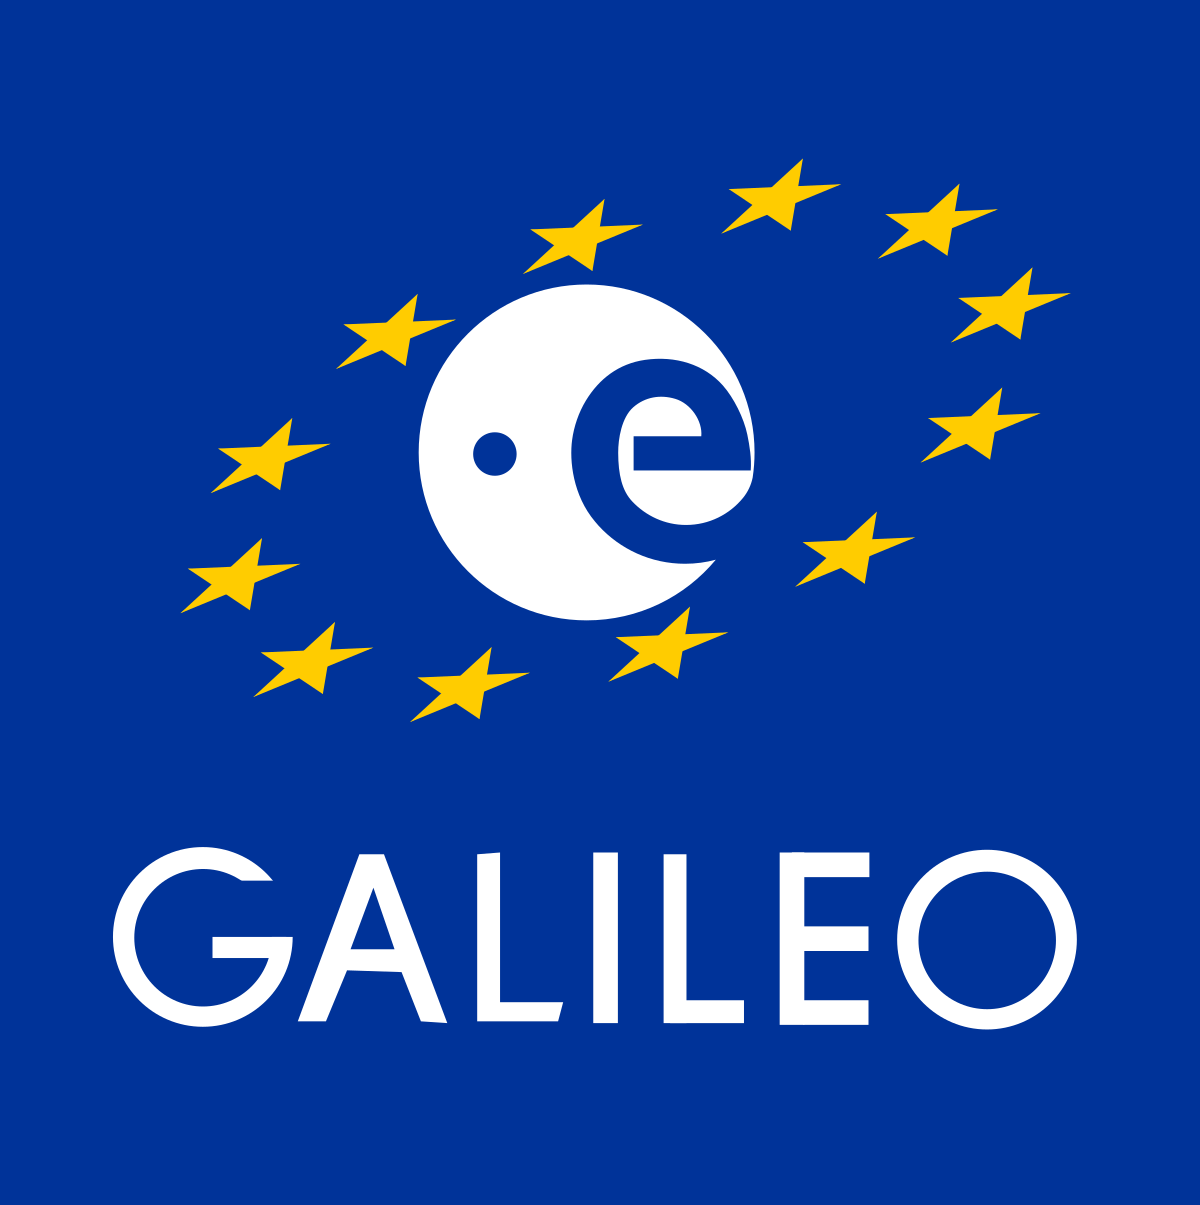 ESA - Galileo - European GNSS Service Centre - European Union Agency for the Space Programme - Спутниковая система навигации Европейского союза и Европейского космического агентства